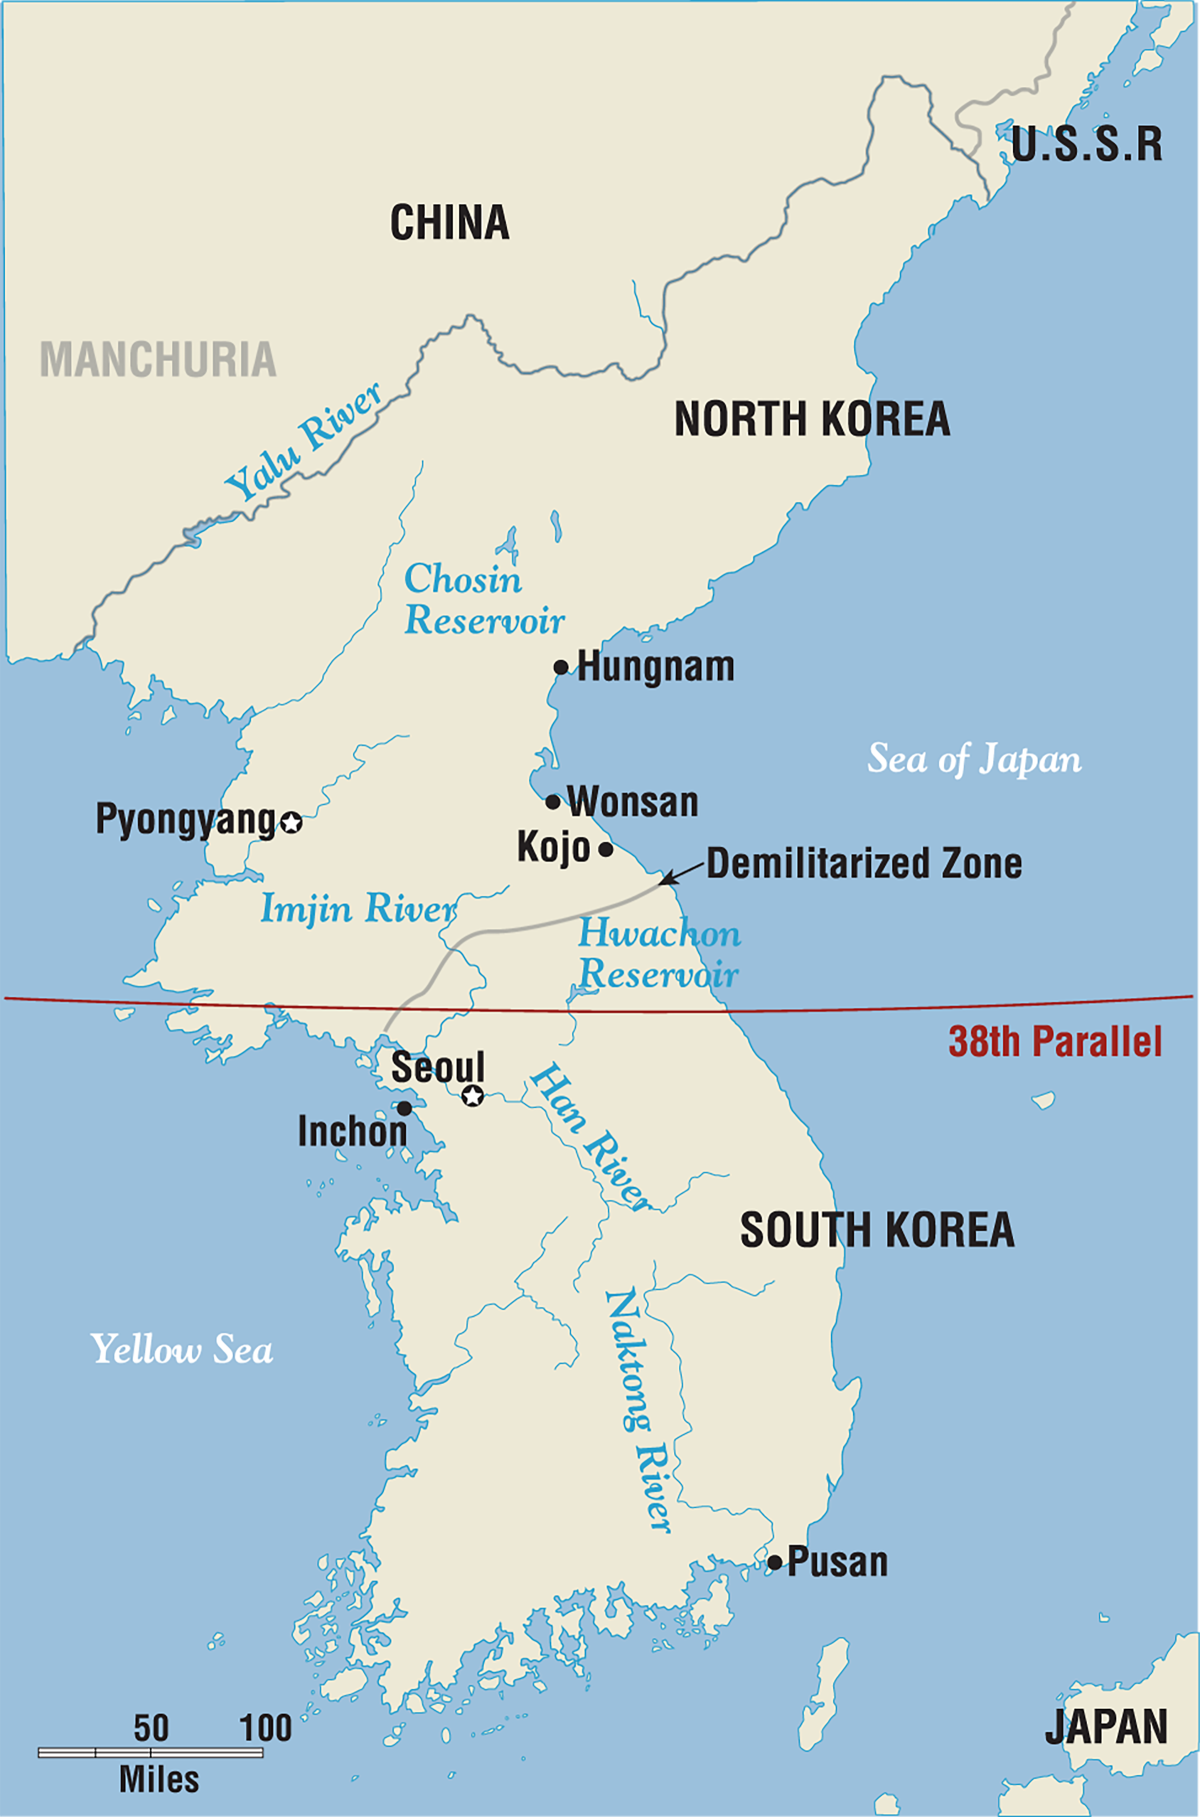 Map of the Korean Peninsula